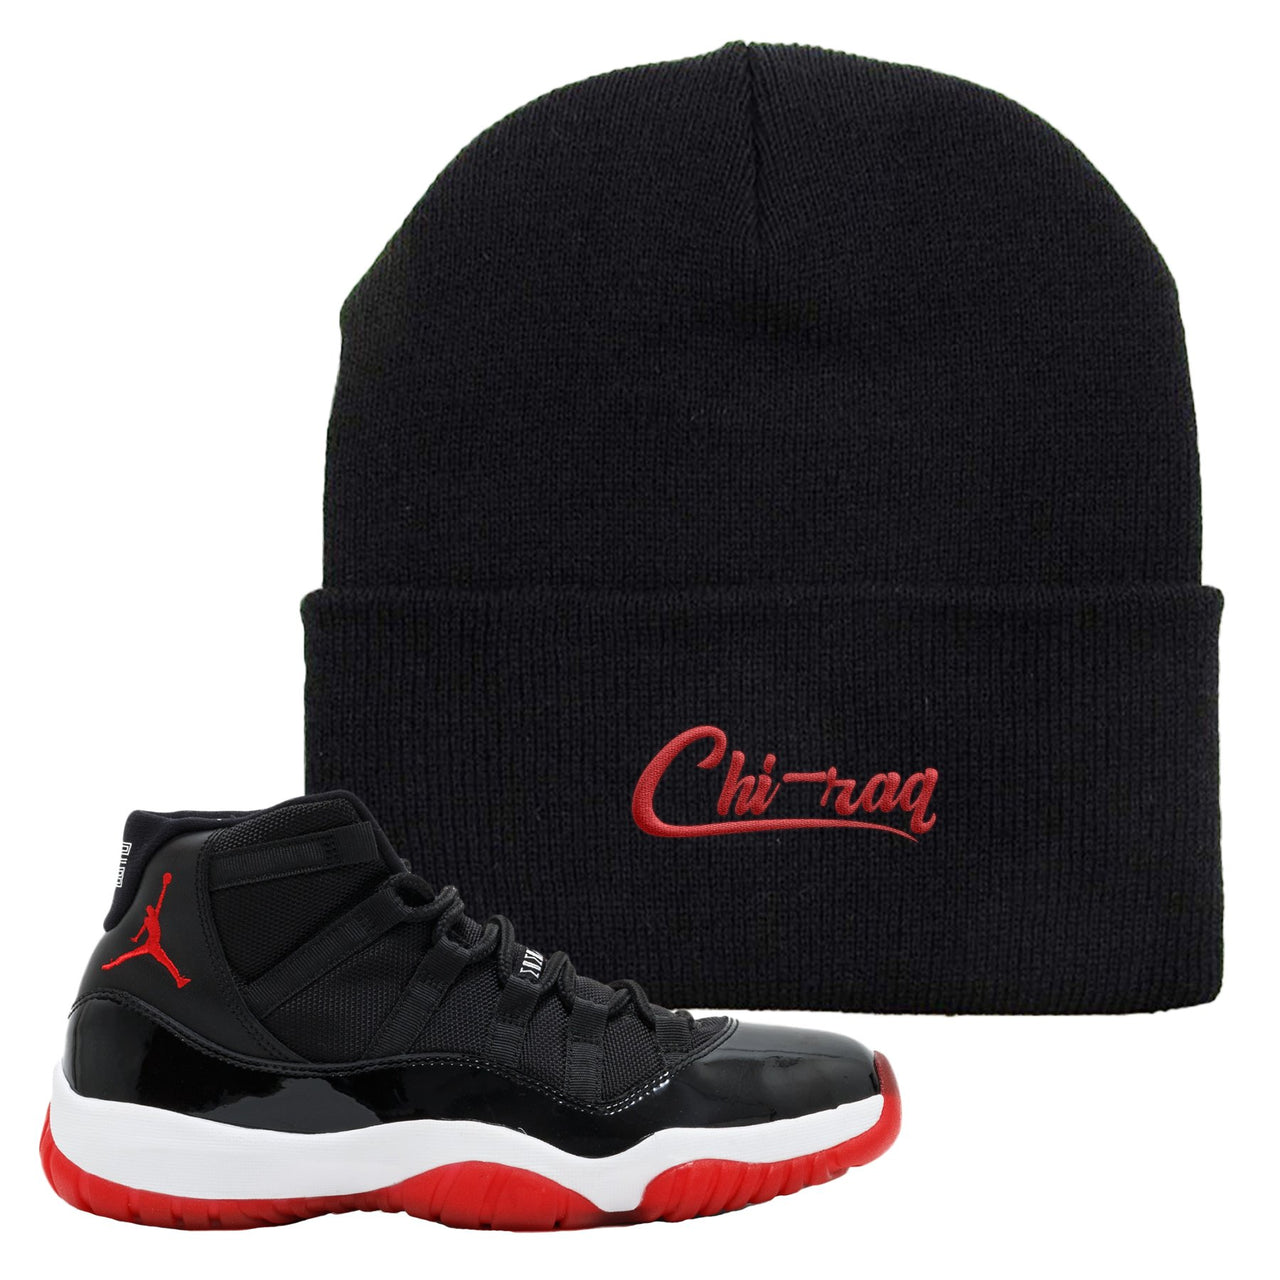 Jordan 11 Bred Chi-raq Black Sneaker Hook Up Beanie